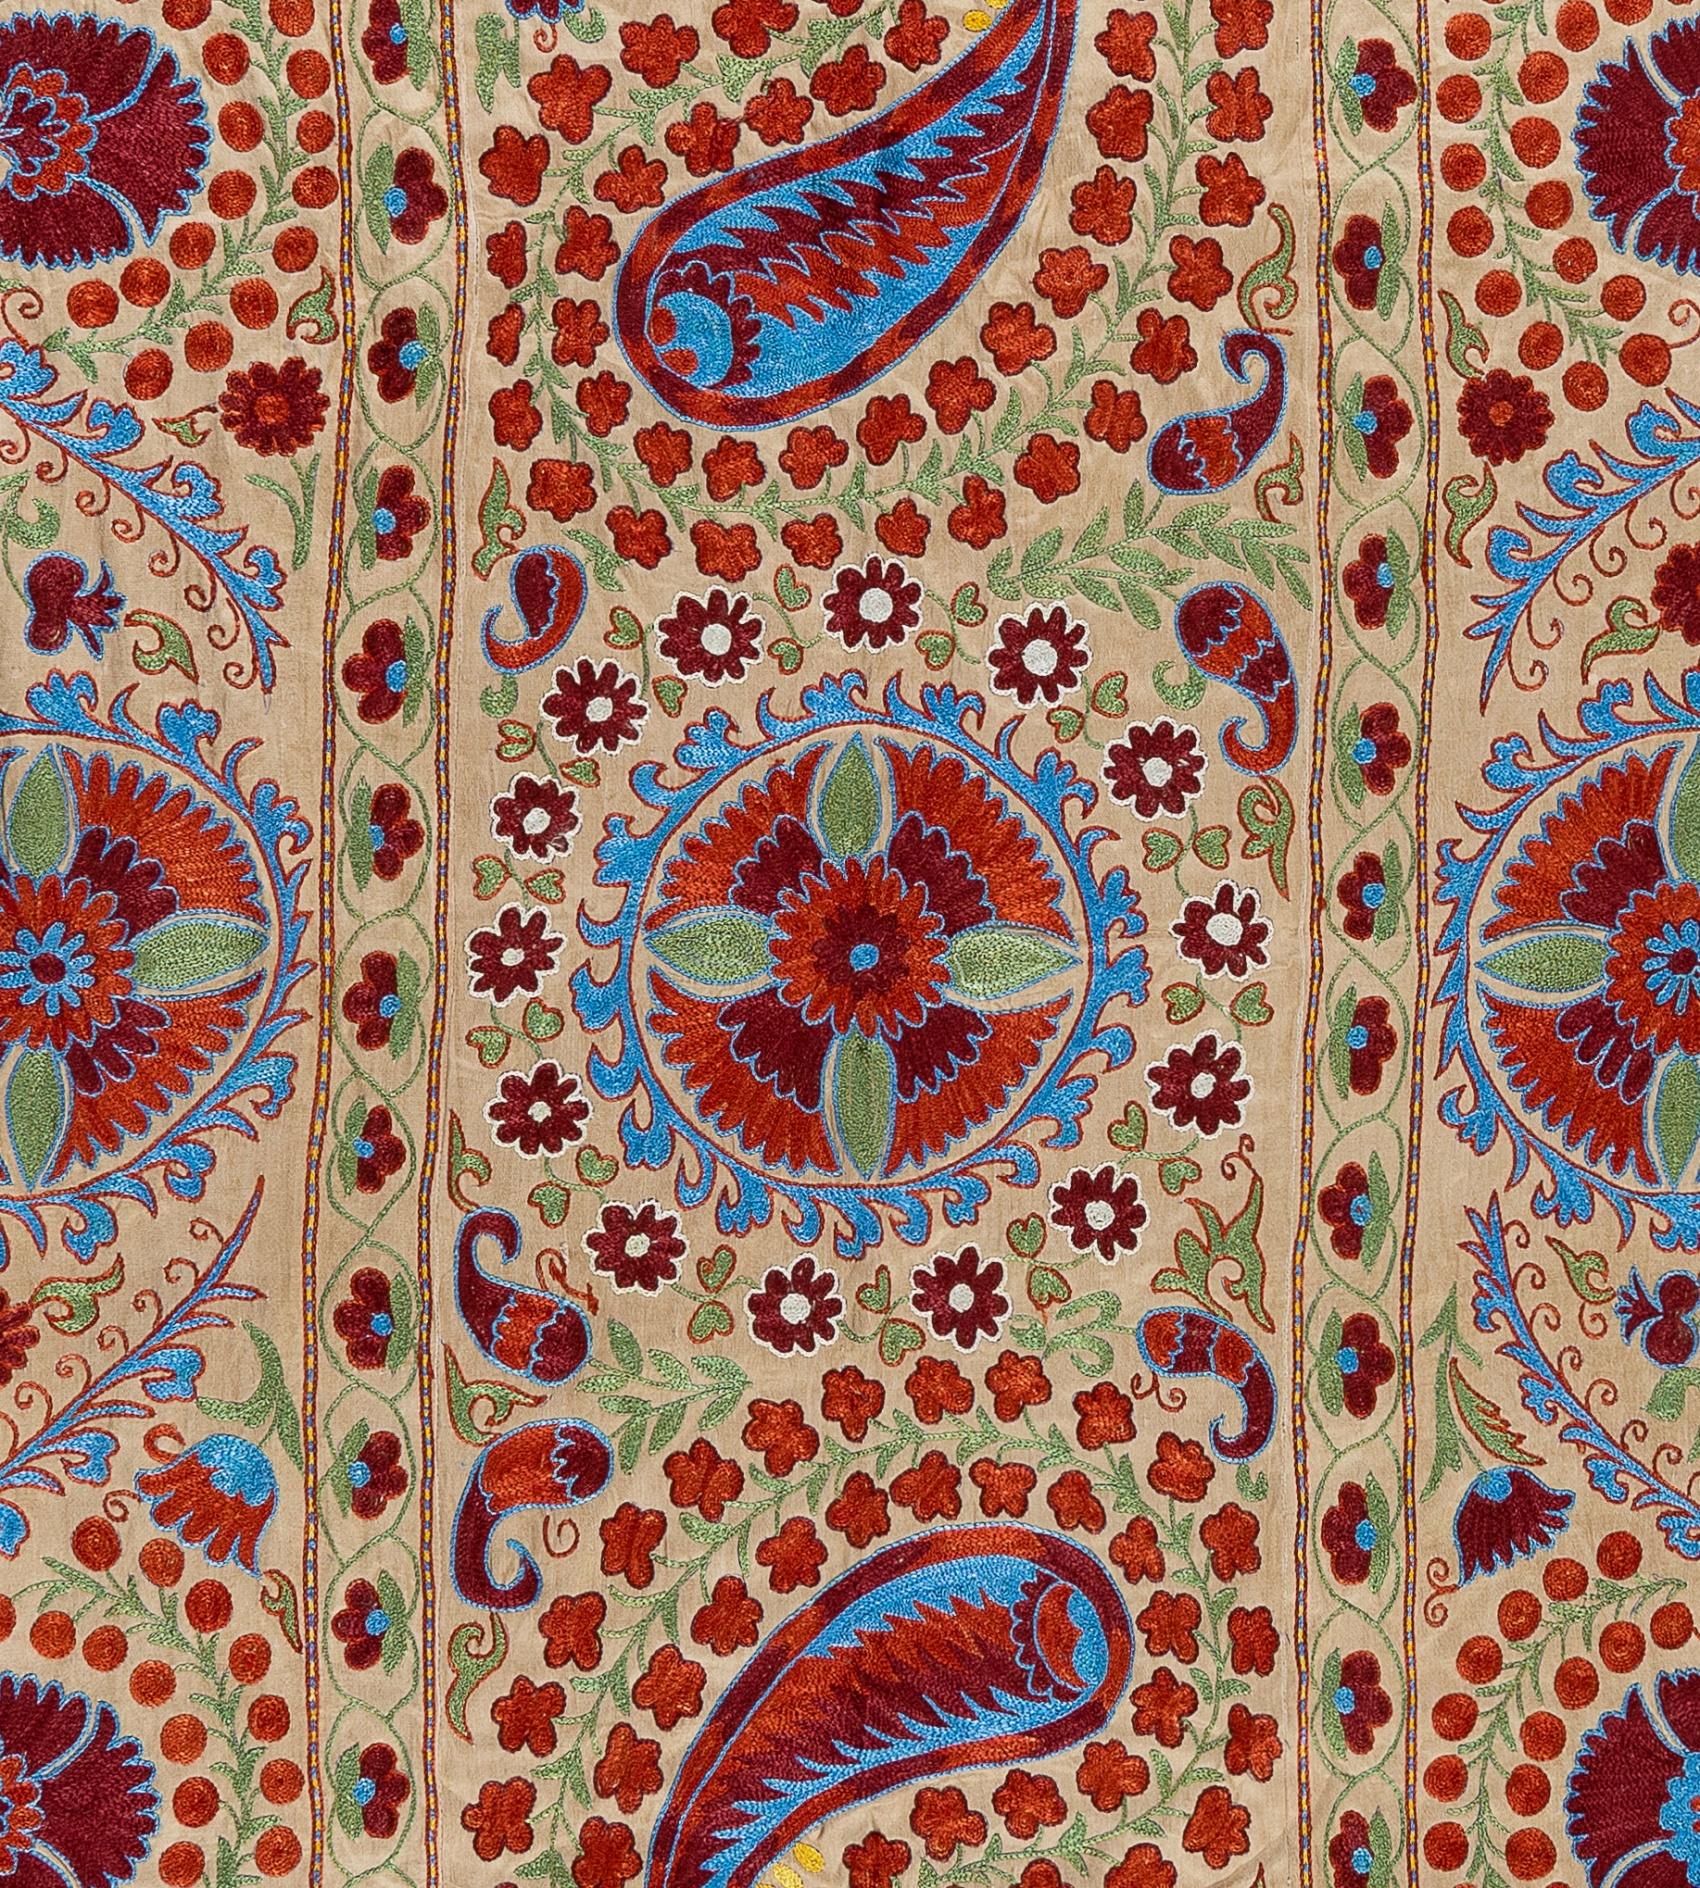 Contemporary Asian / Uzbek Suzani Textile, Embroidered Cotton & Silk Wall Hanging